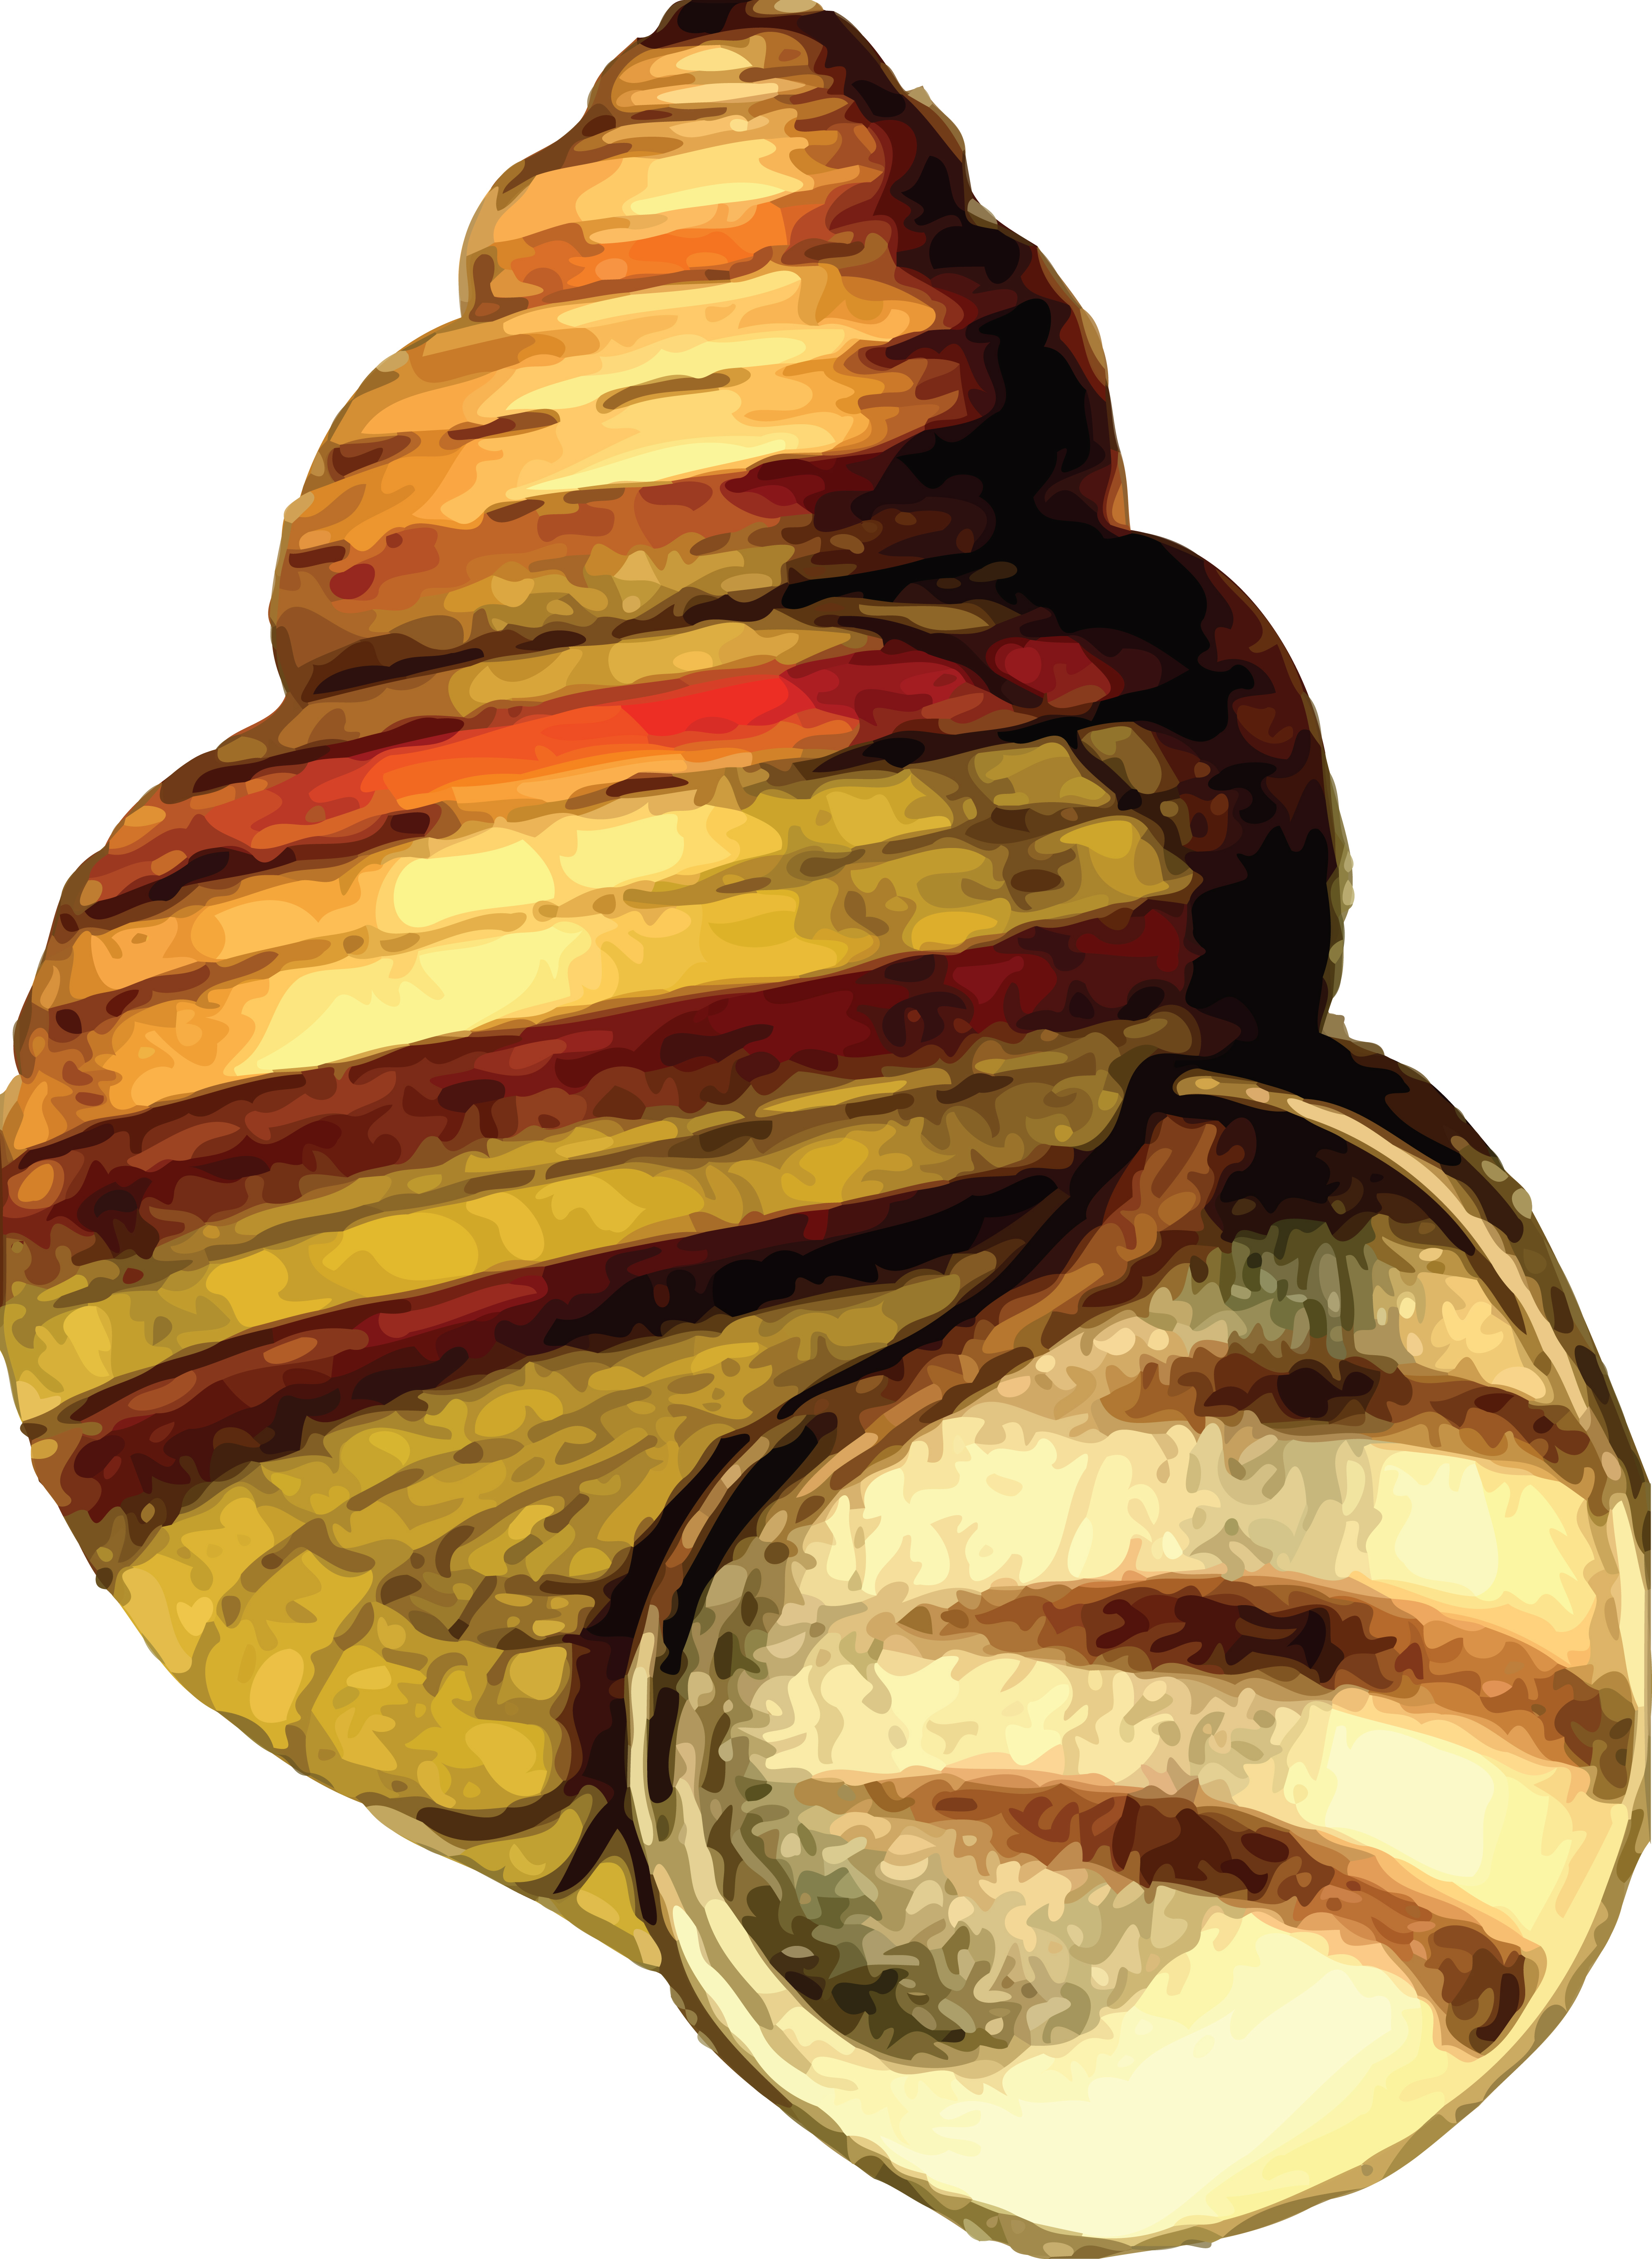 A sea shell photo